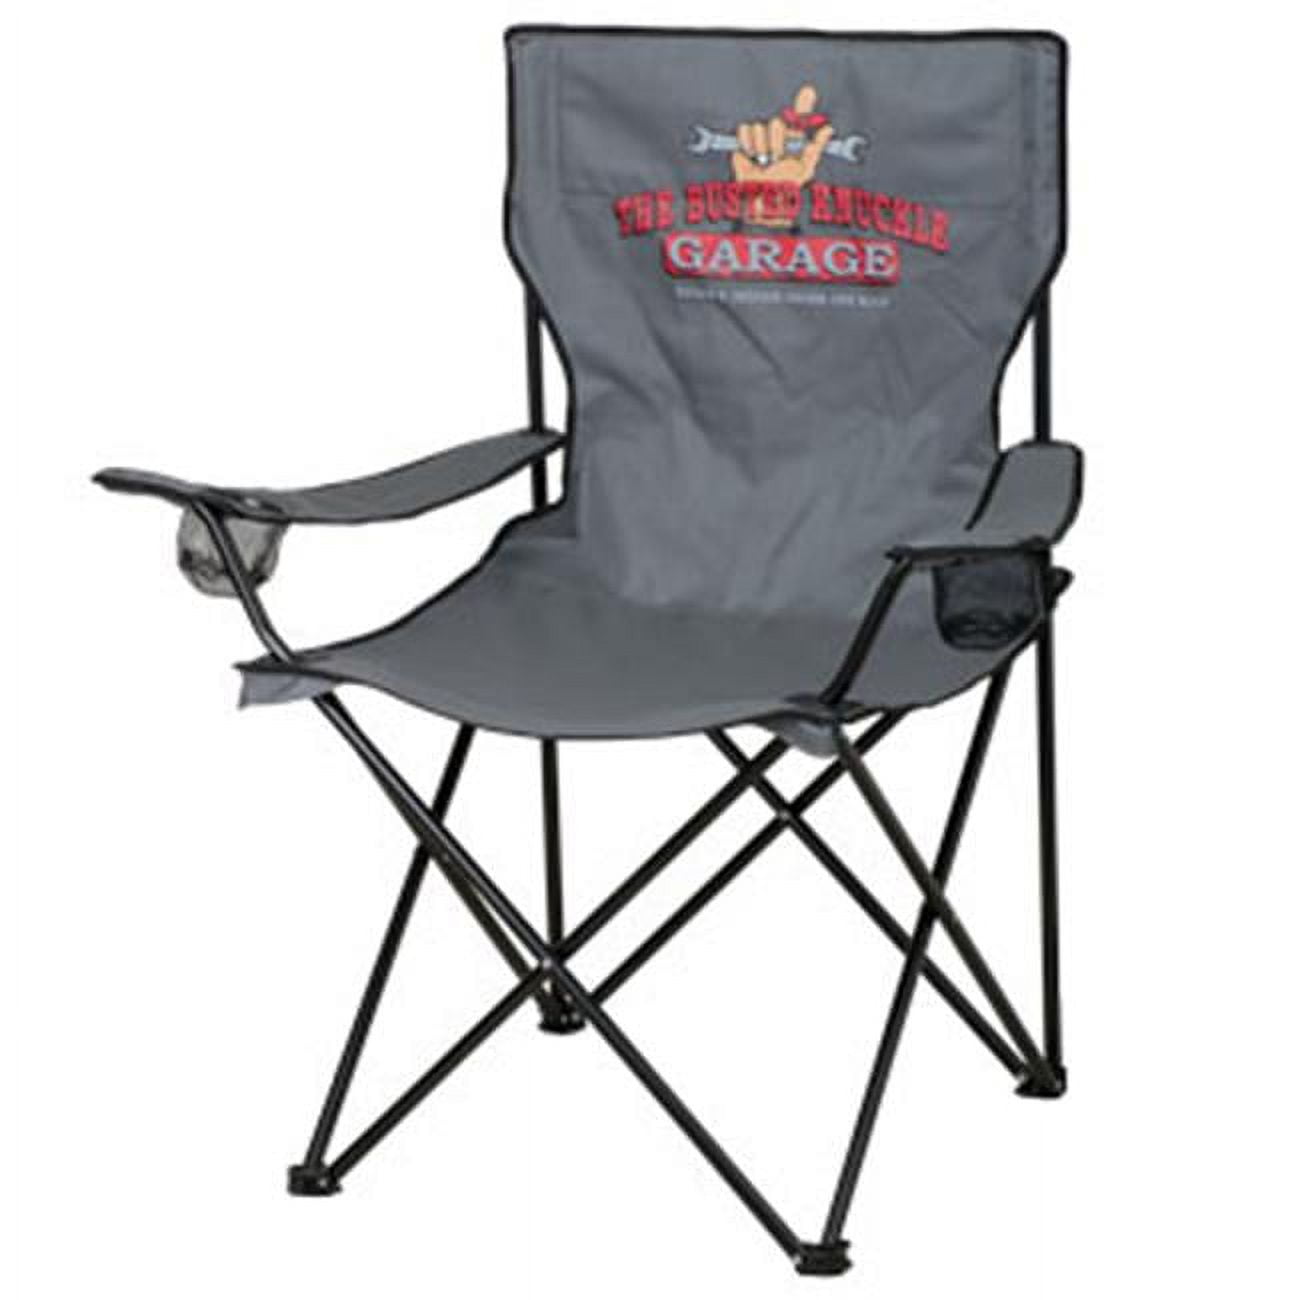 Bkg-70065 Folding Chair - Gray, Red & Black